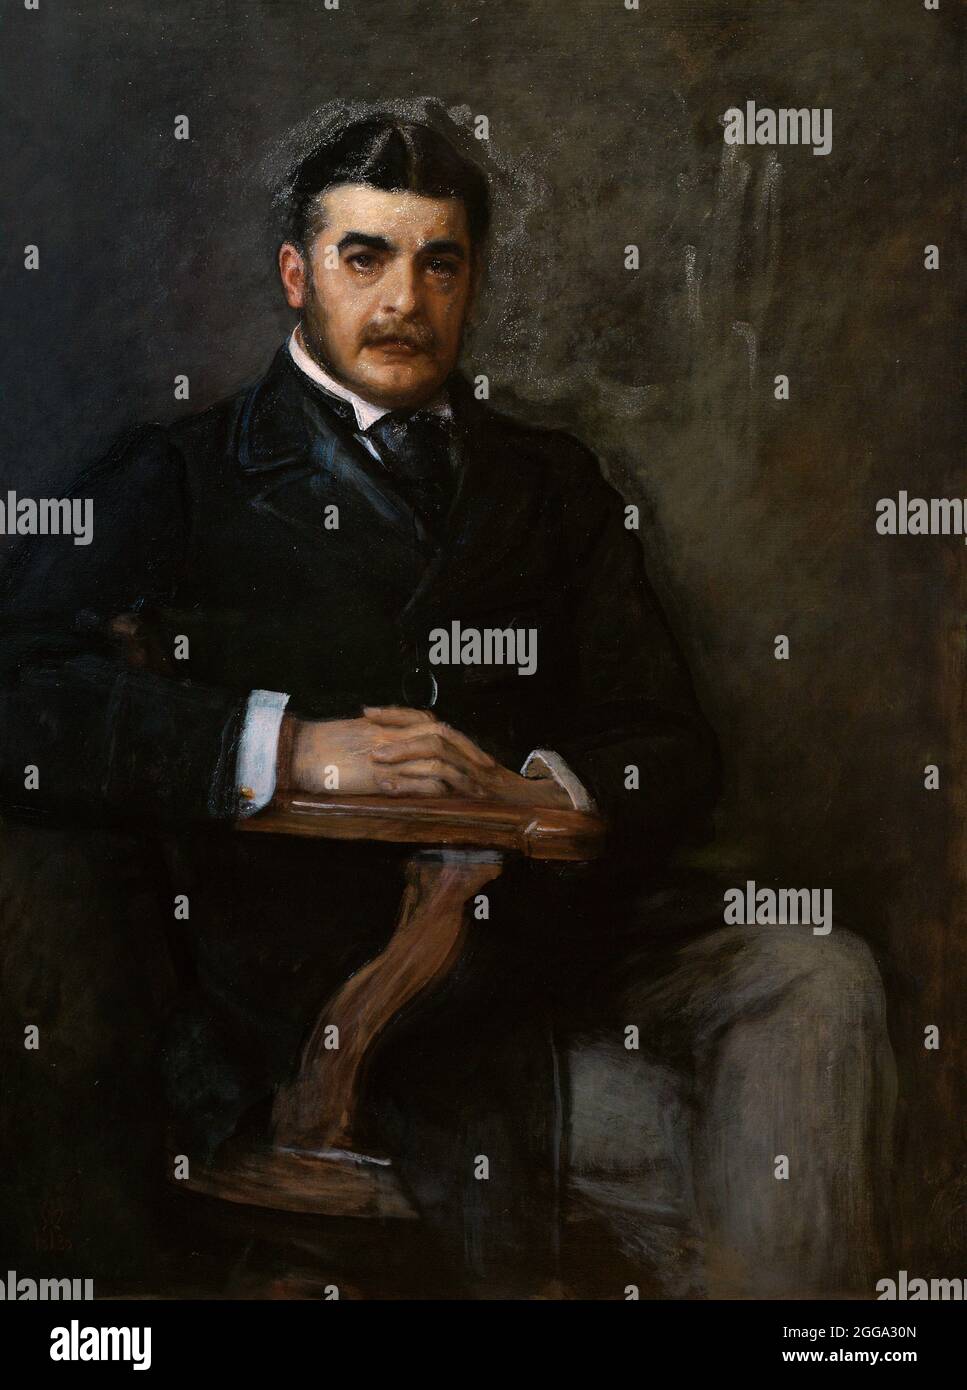 Sir Arthur Sullivan (Arthur Seymour Sullivan) (1842-1900). English composer. Portrait by Sir John Everett Millais (1829-1896). Oil on canvas (115,6 x 87 cm), 1888. National Portrait Gallery. London, England, United Kingdom. Stock Photo